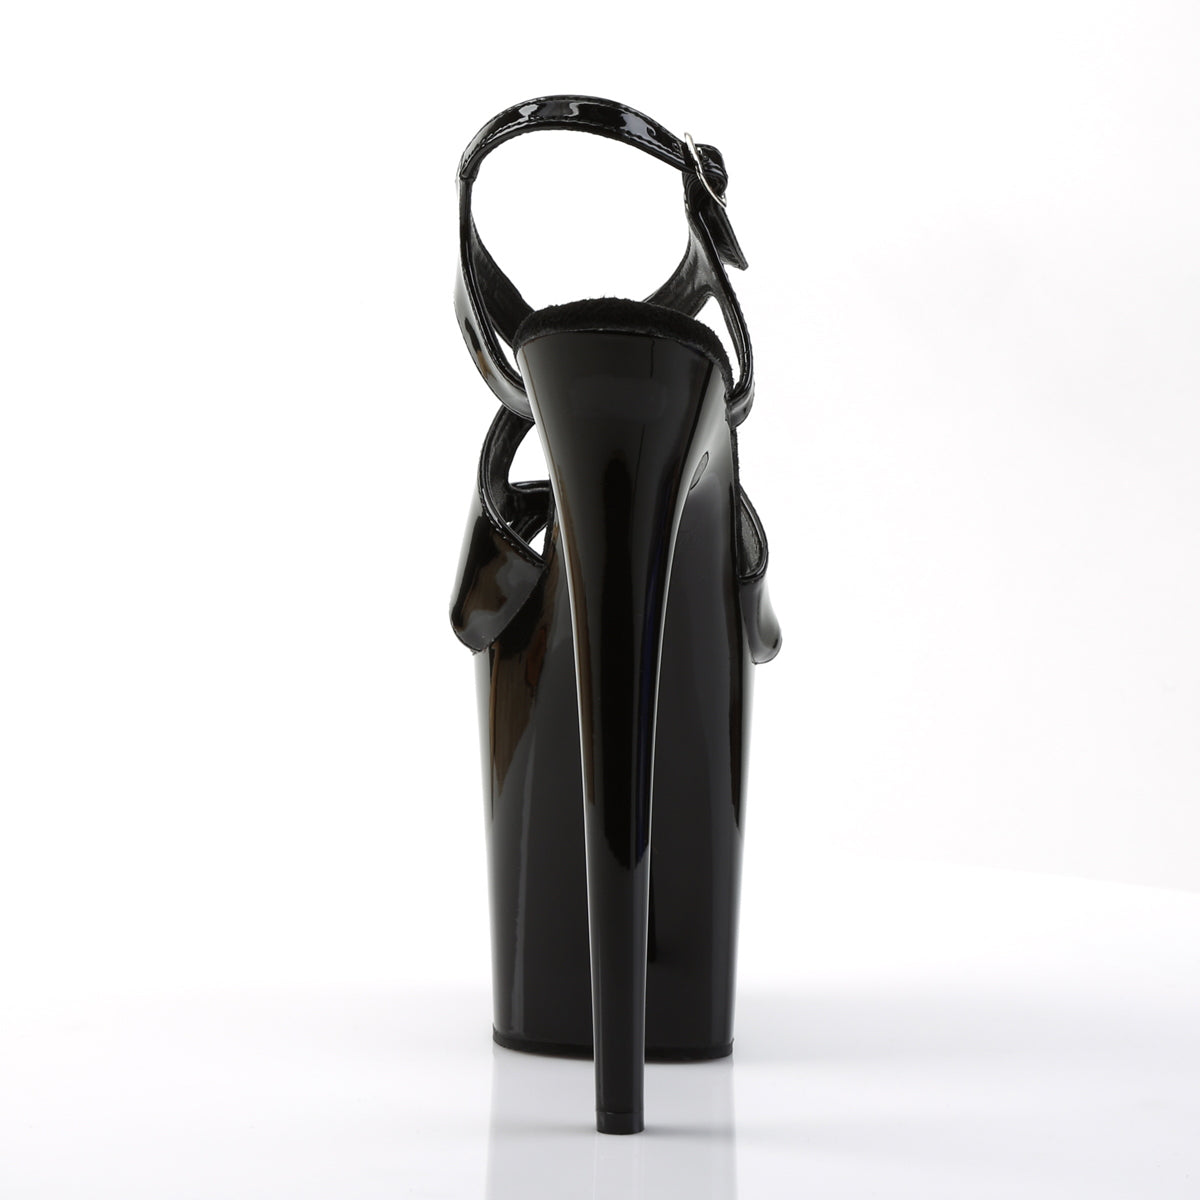 FLAMINGO-831 Black Patent Platform Sandal Pleaser